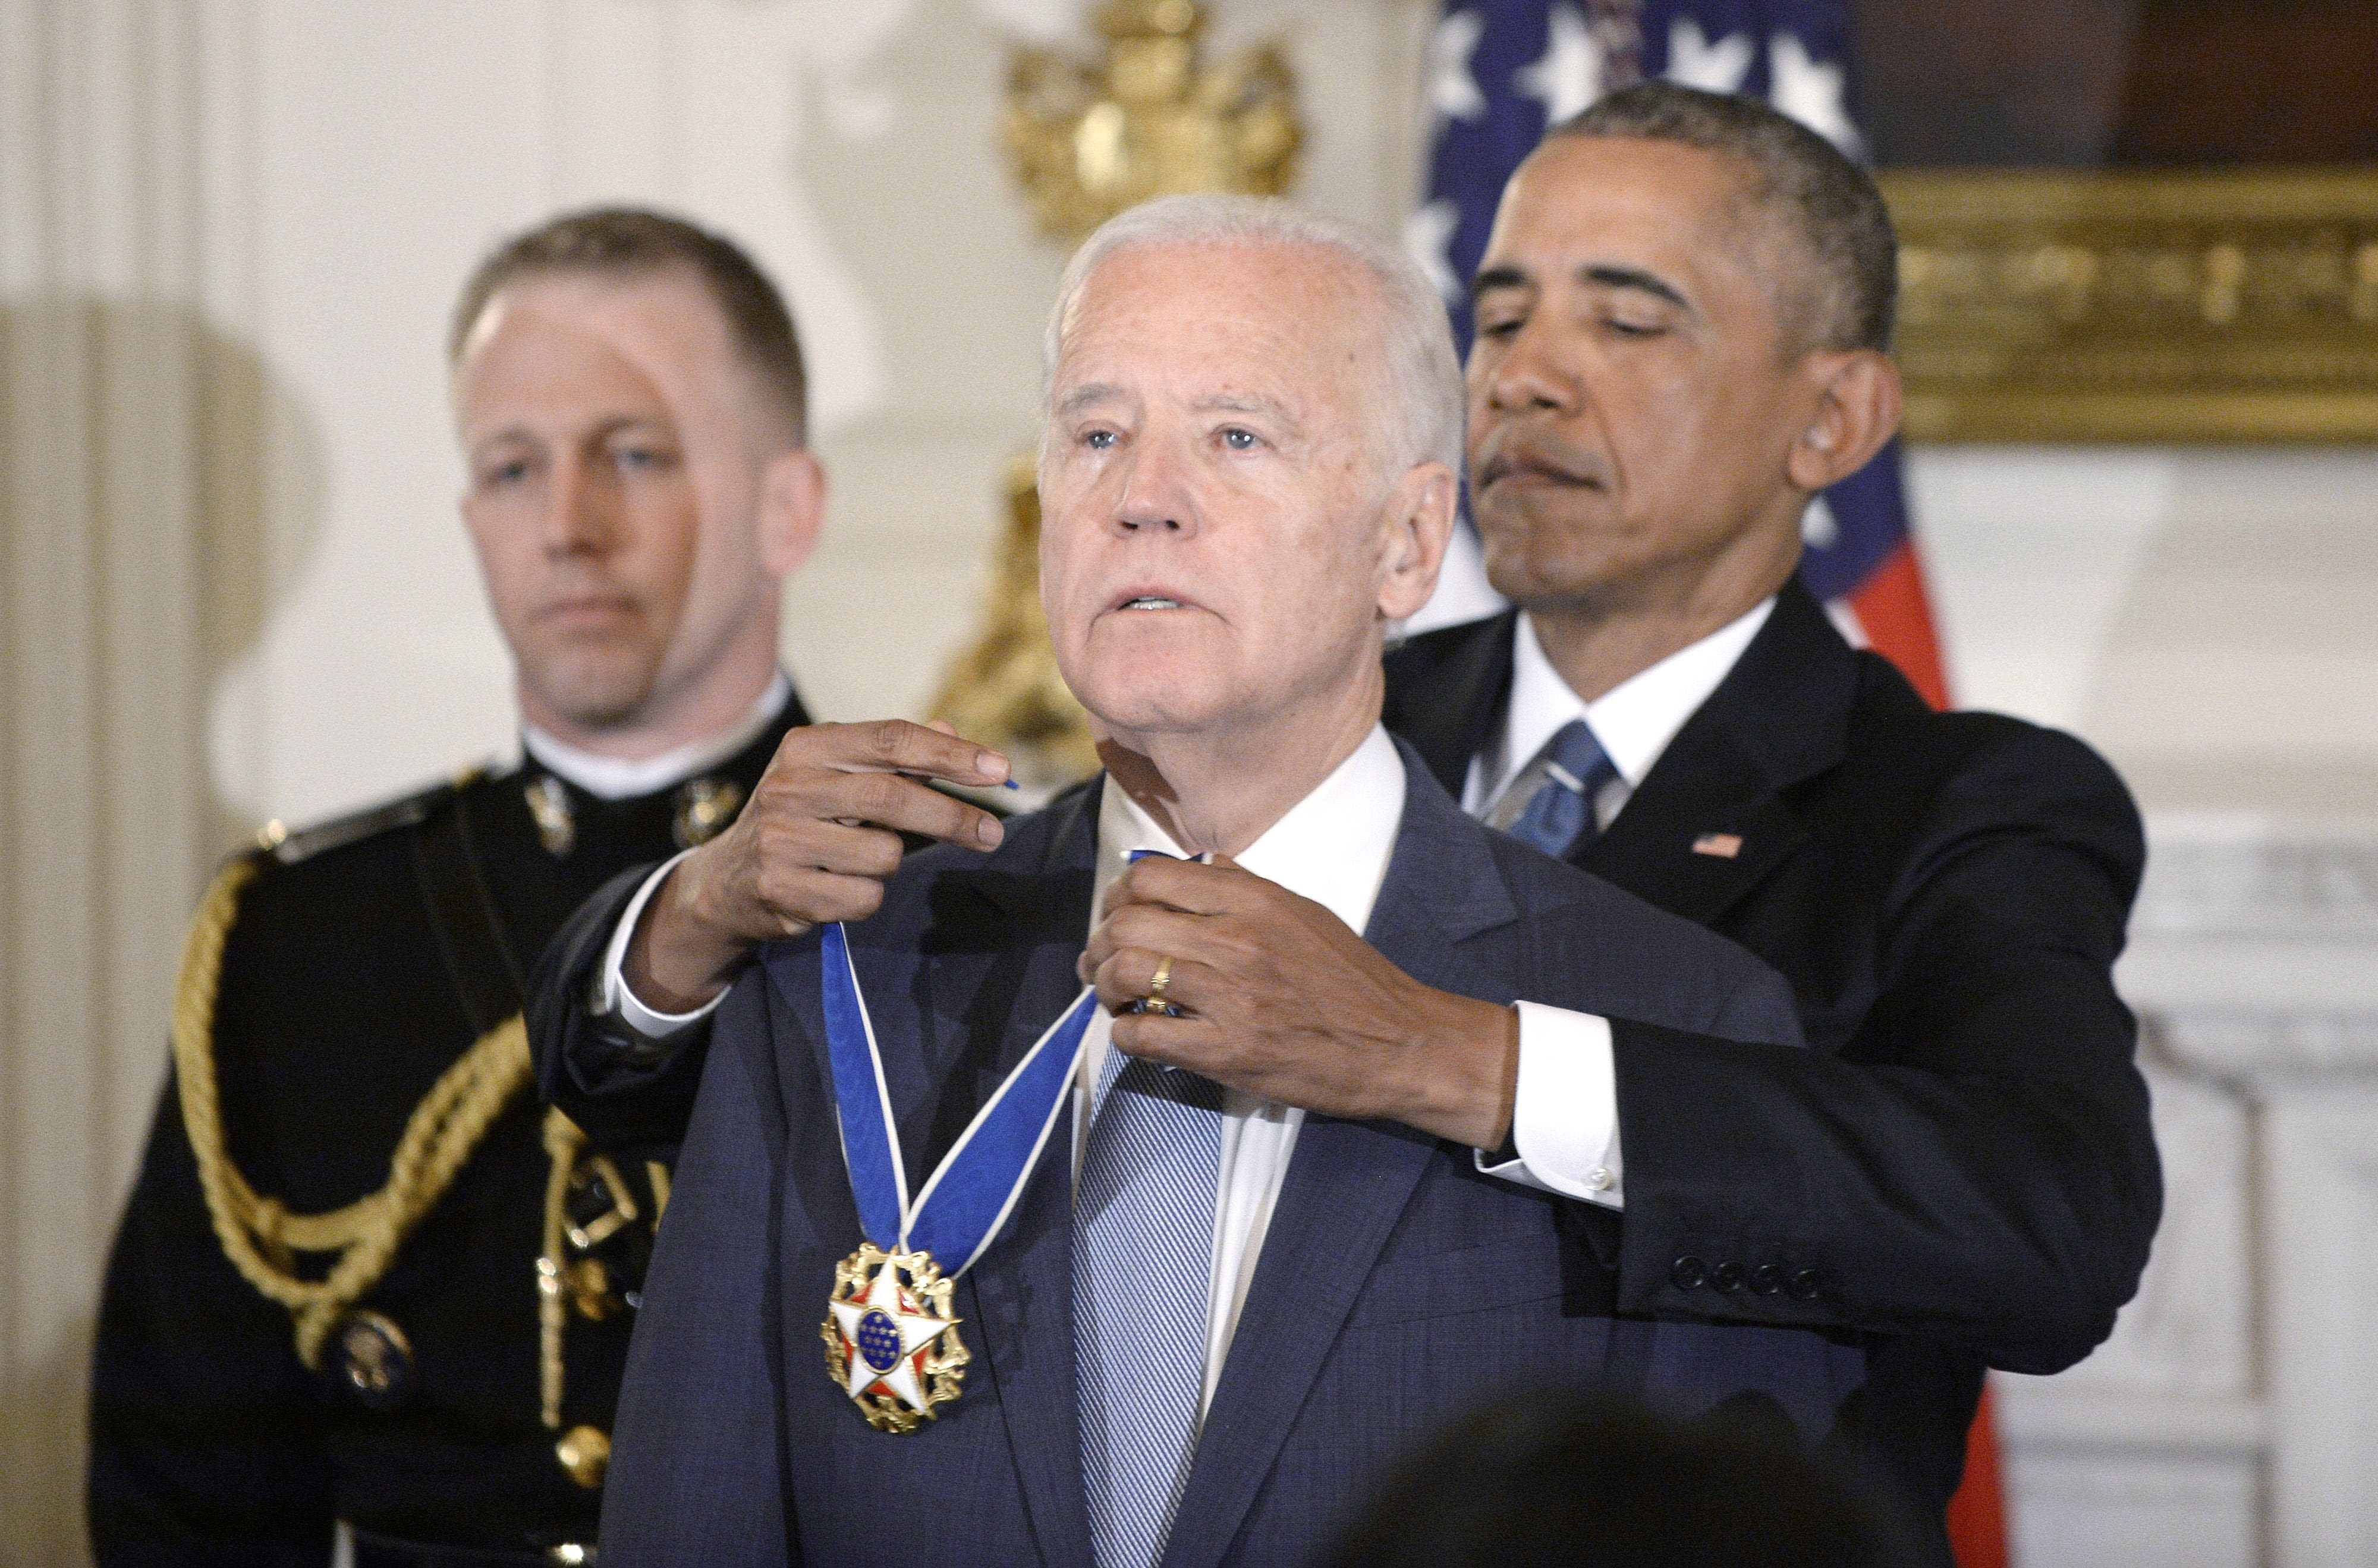 Say it ain't so Joe: A look at Joe Biden’s intertwined history with Delaware, the nation